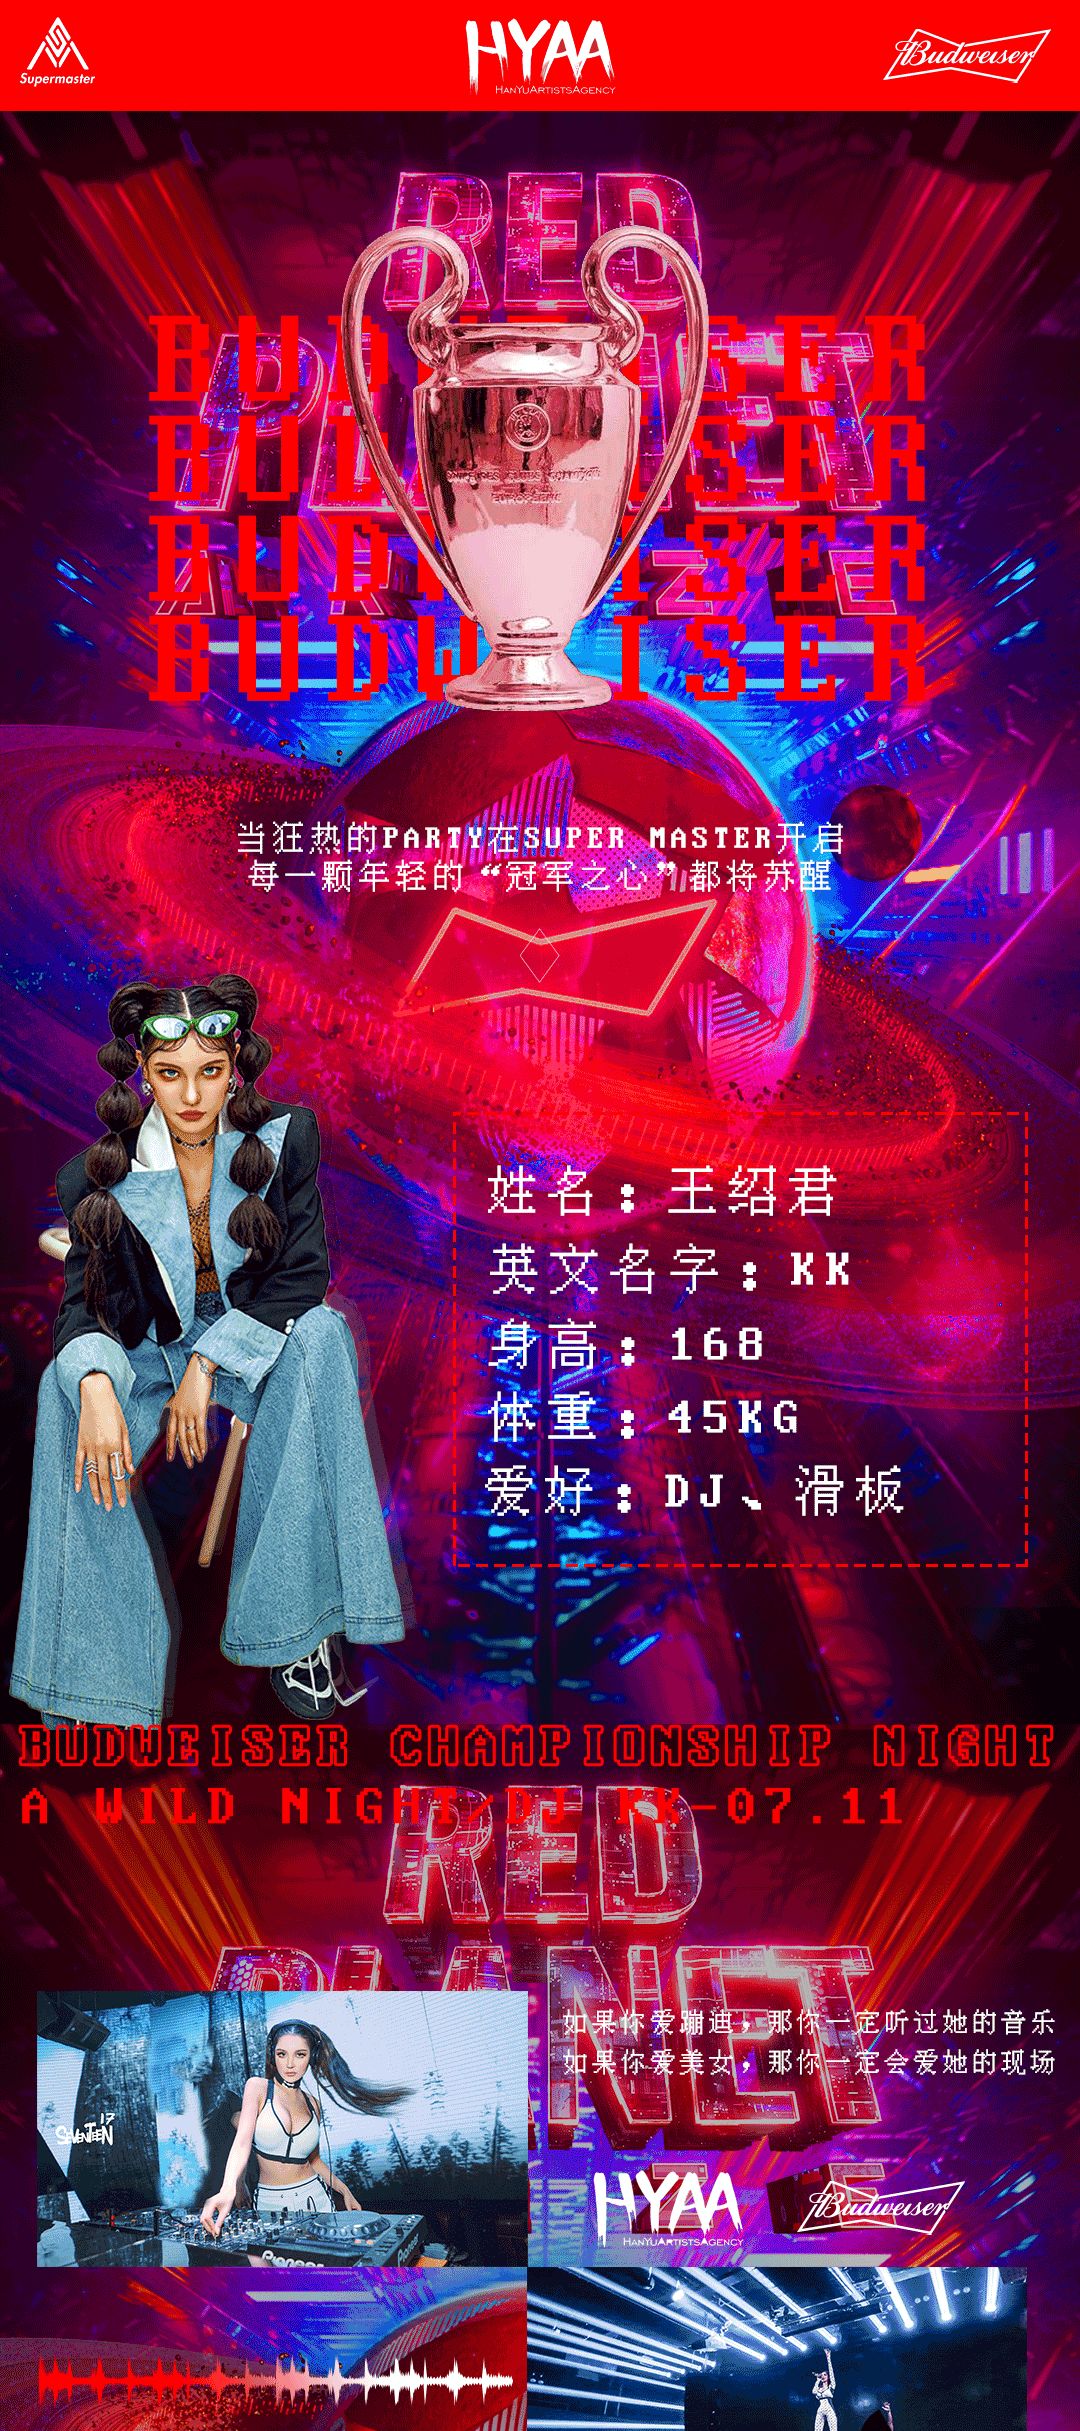 Super Master|2021.07.11百威红色星球，特邀女子百大DJ/KK,一起野性燥夜!-九江苏博马斯特酒吧/SuperMasterClub